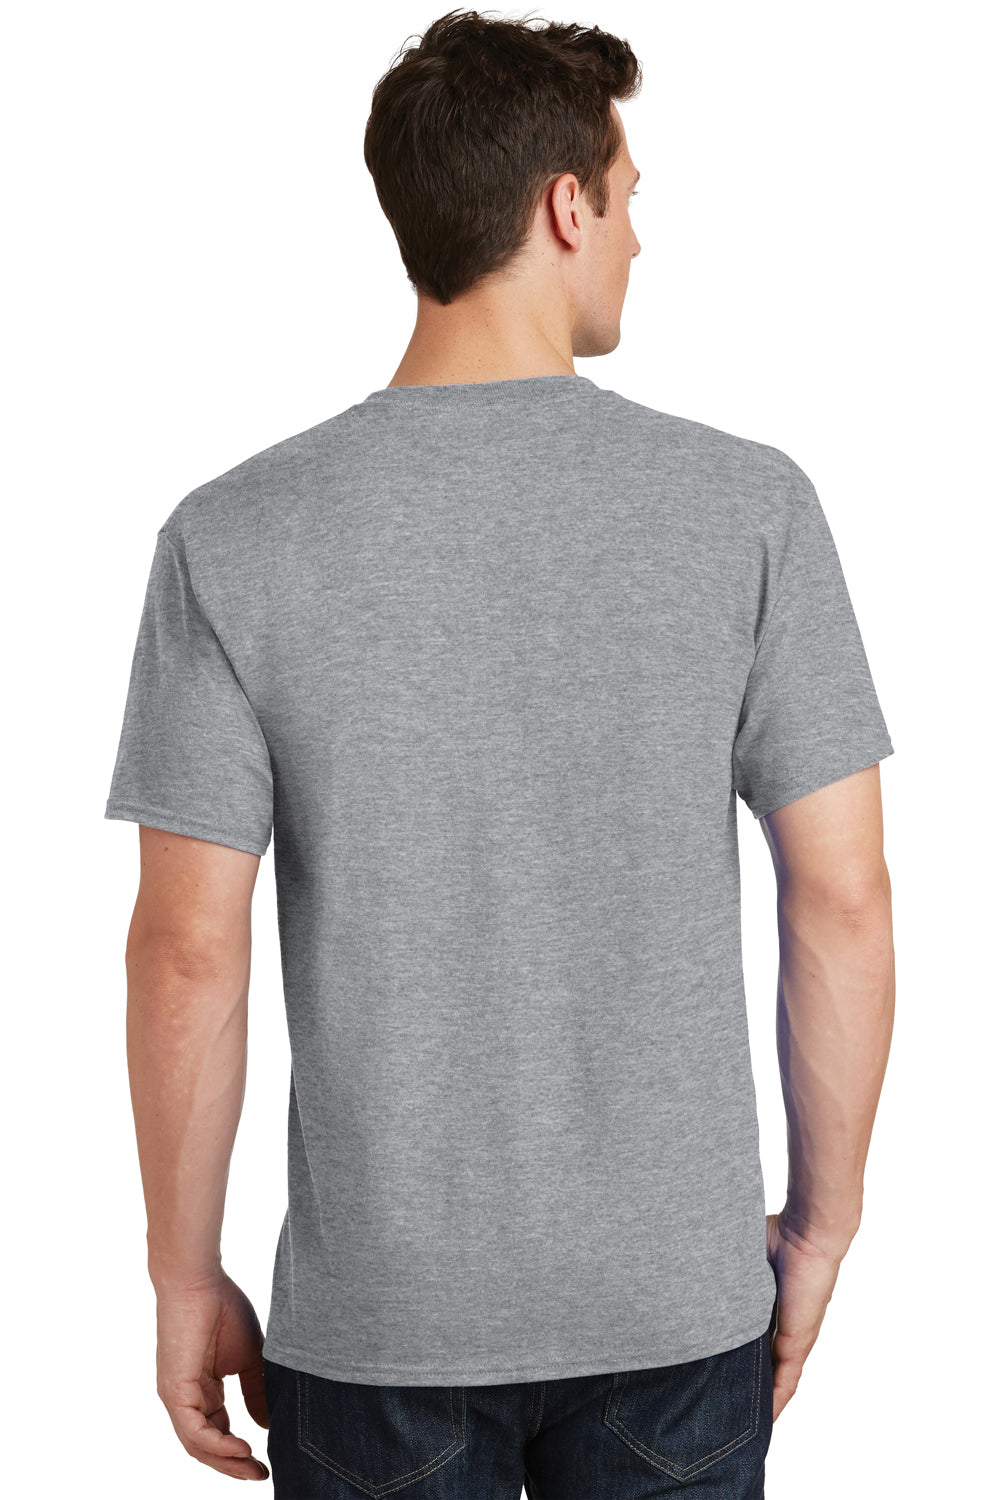 Port & Company PC54 Mens Core Short Sleeve Crewneck T-Shirt Heather Grey Back